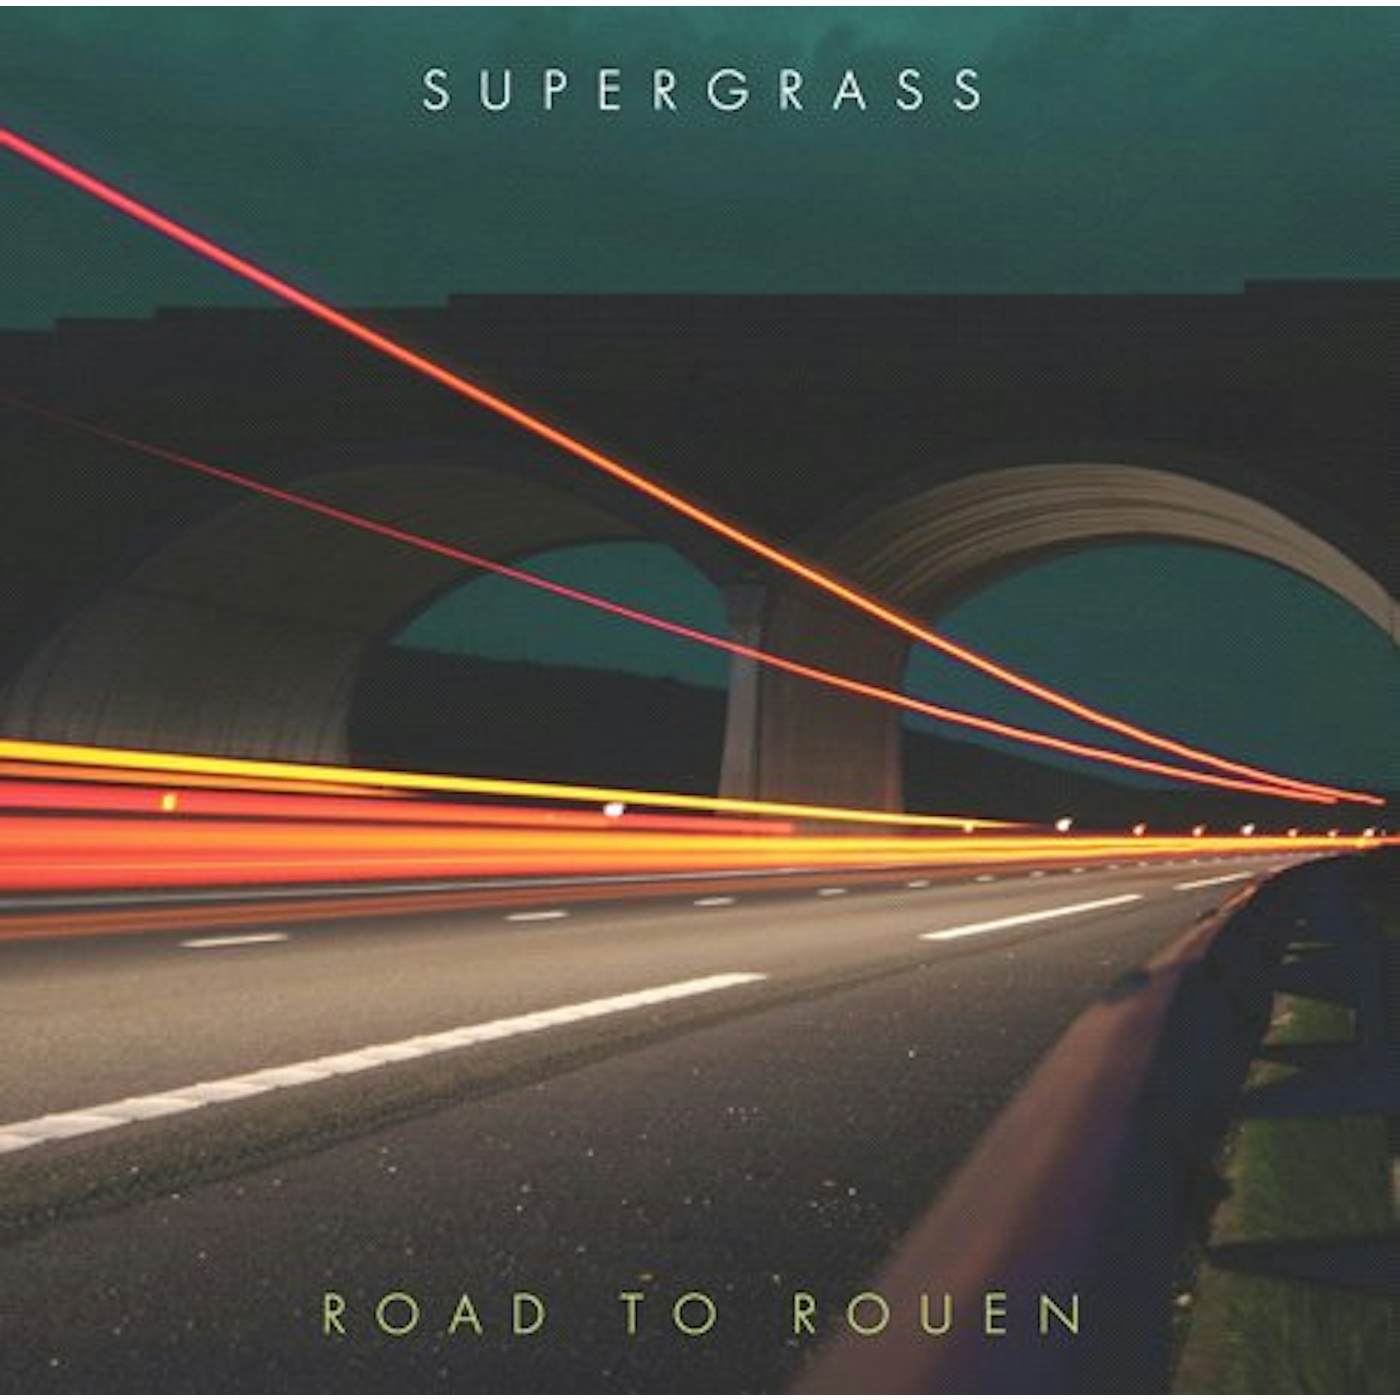 Supergrass ROAD TO ROUEN CD